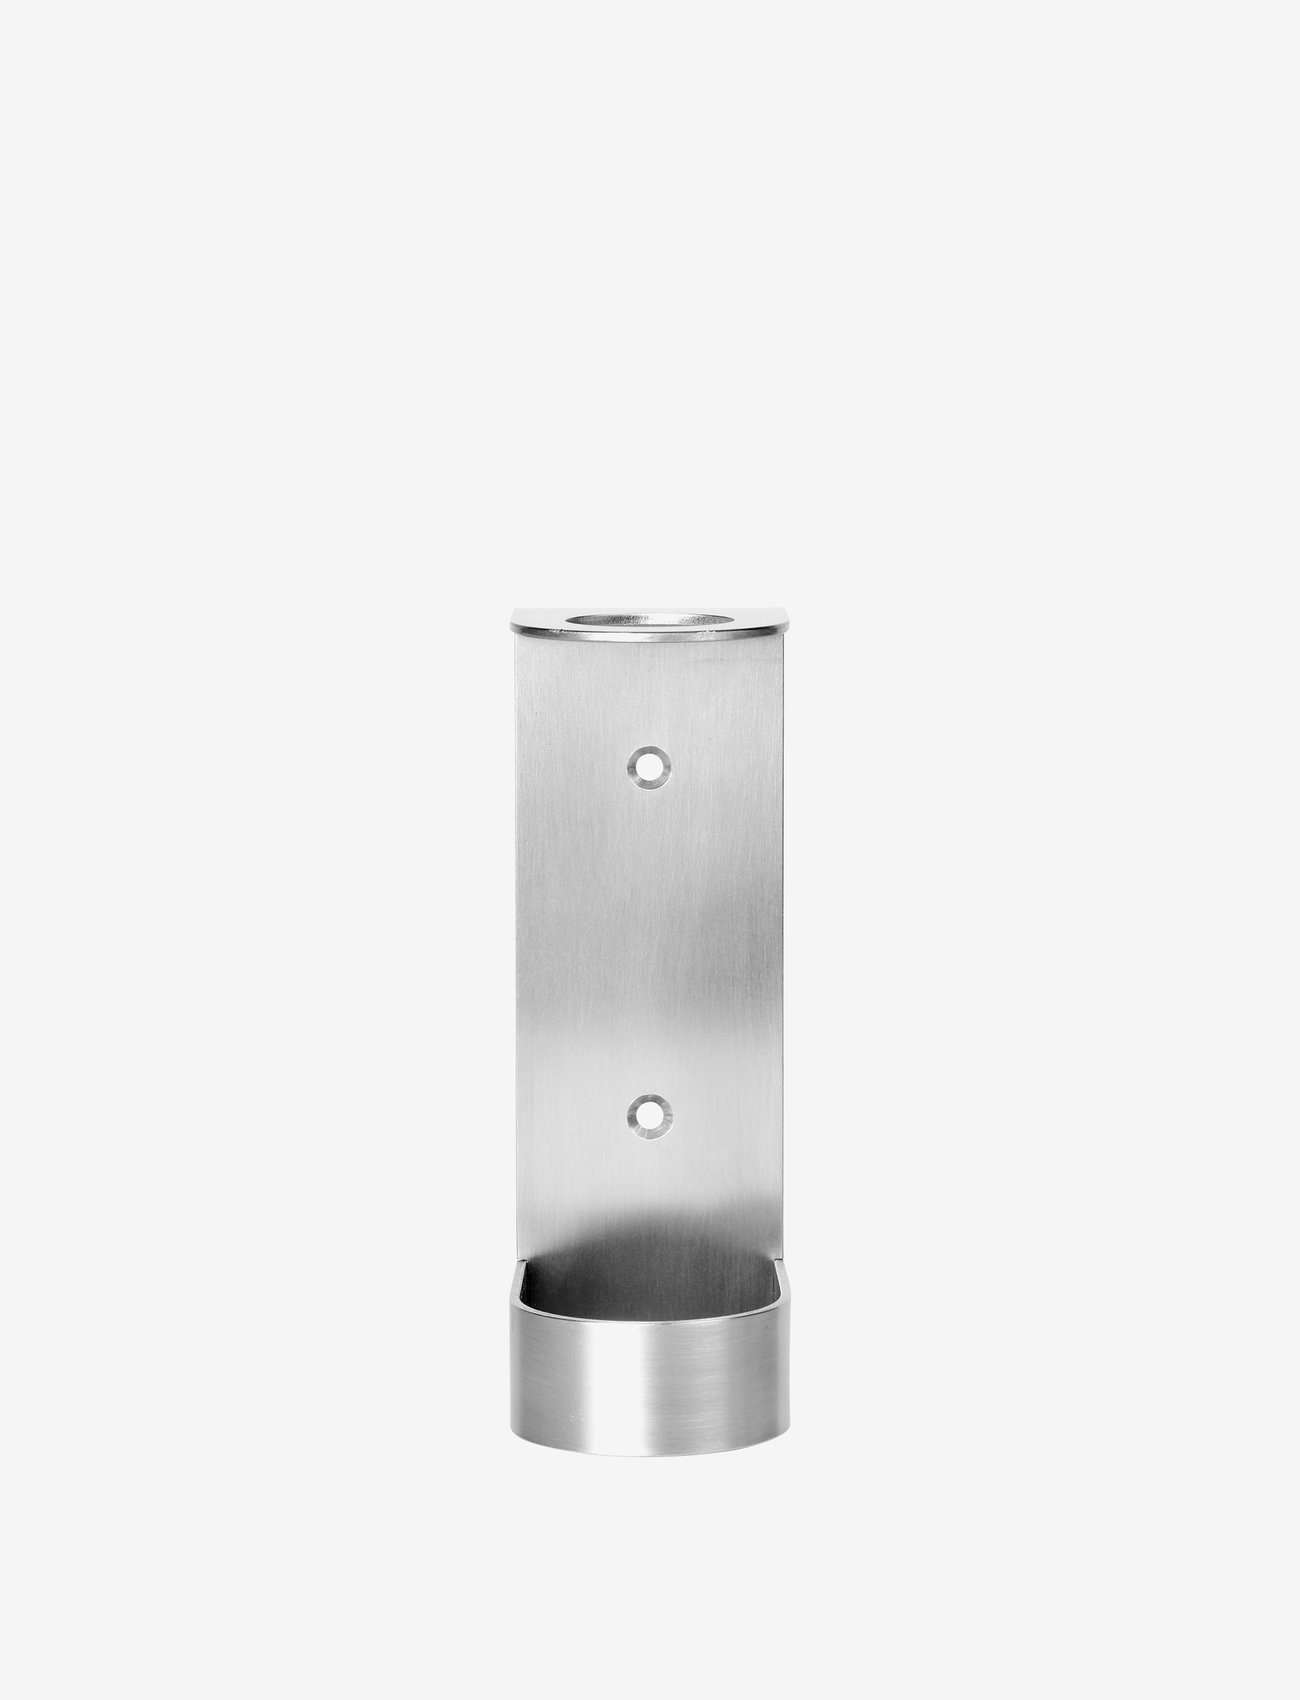 Kristina Dam Studio - Dowel Bottle Display - Hand Lotion - Āķi un pogas - stainless steel - 0